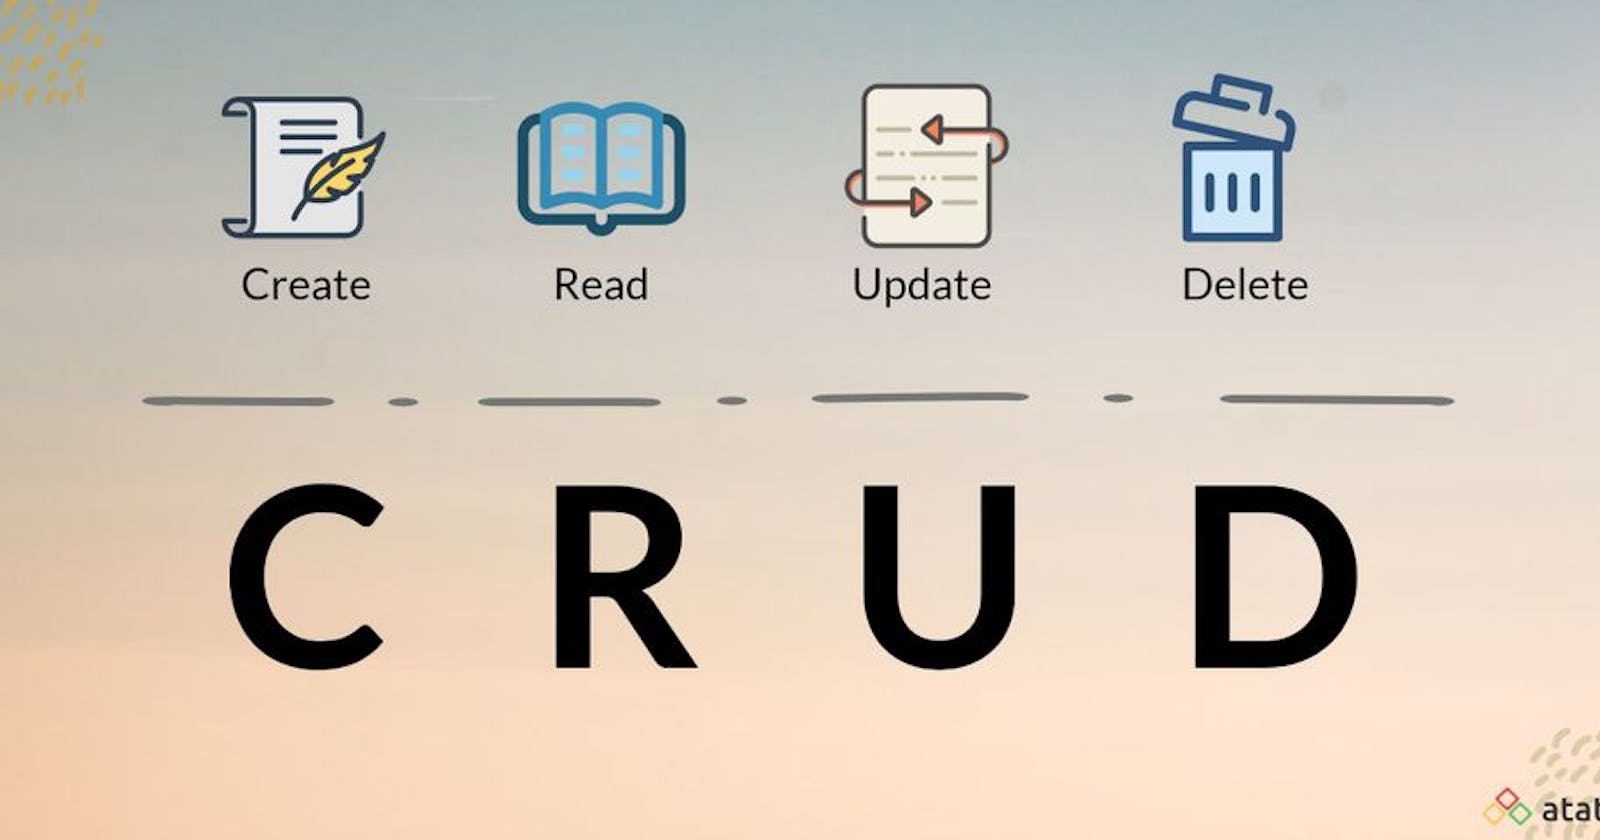 "Building a CRUD (Create, Read, Update, Delete) Operations App in Flutter".